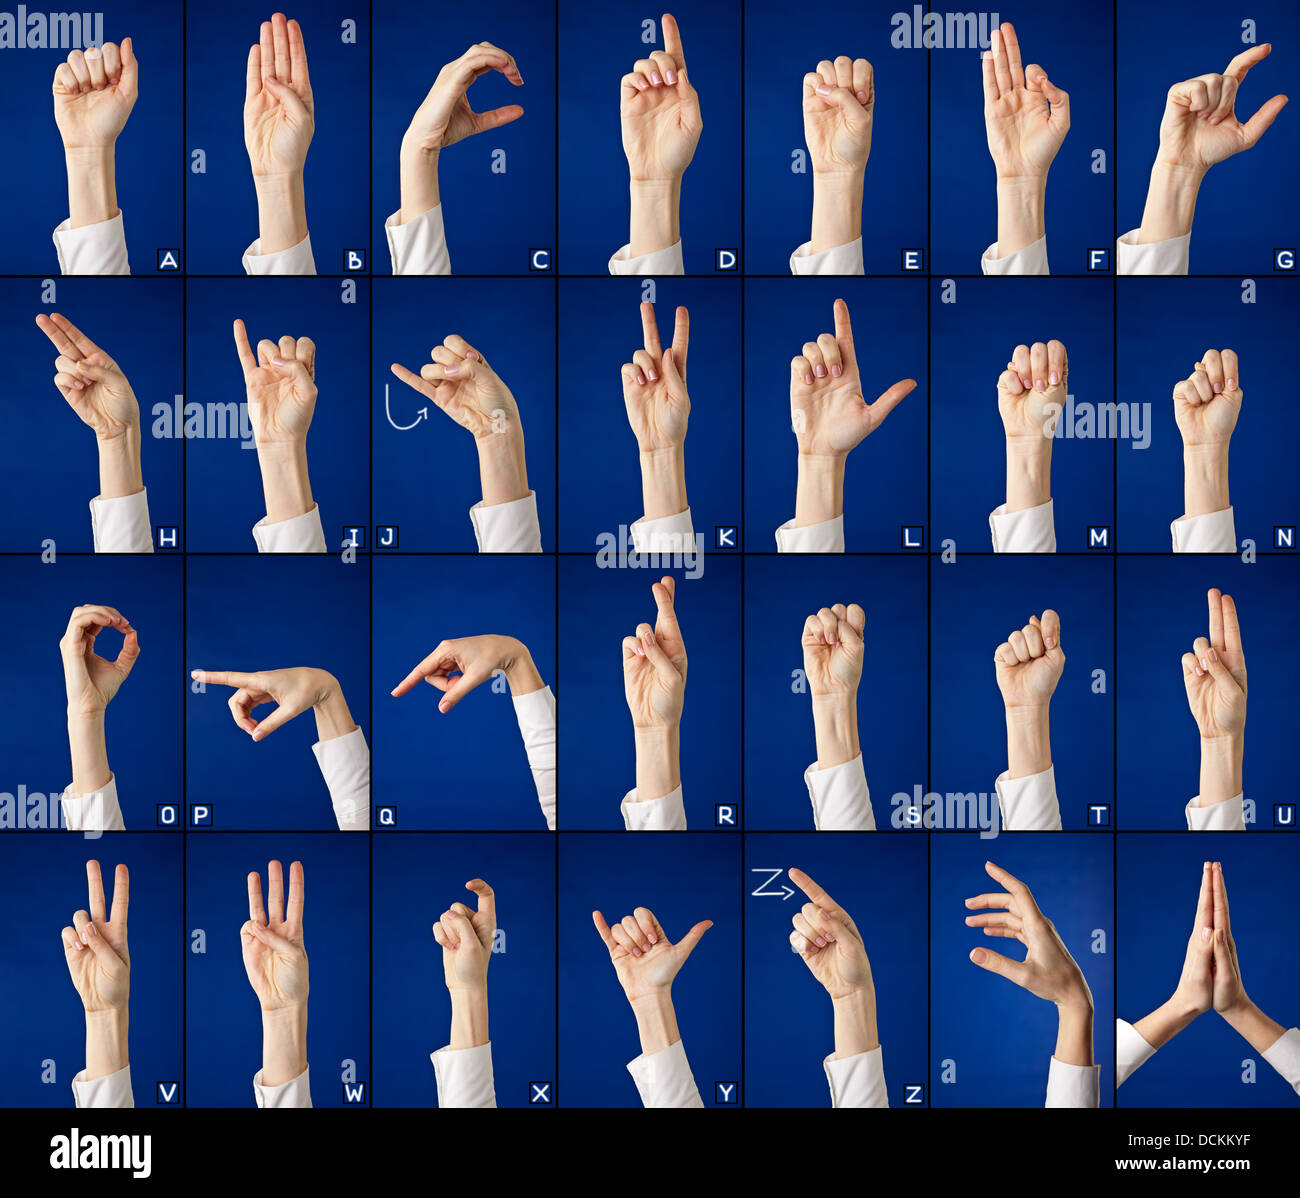 Alphabet in sign language Stock Photo